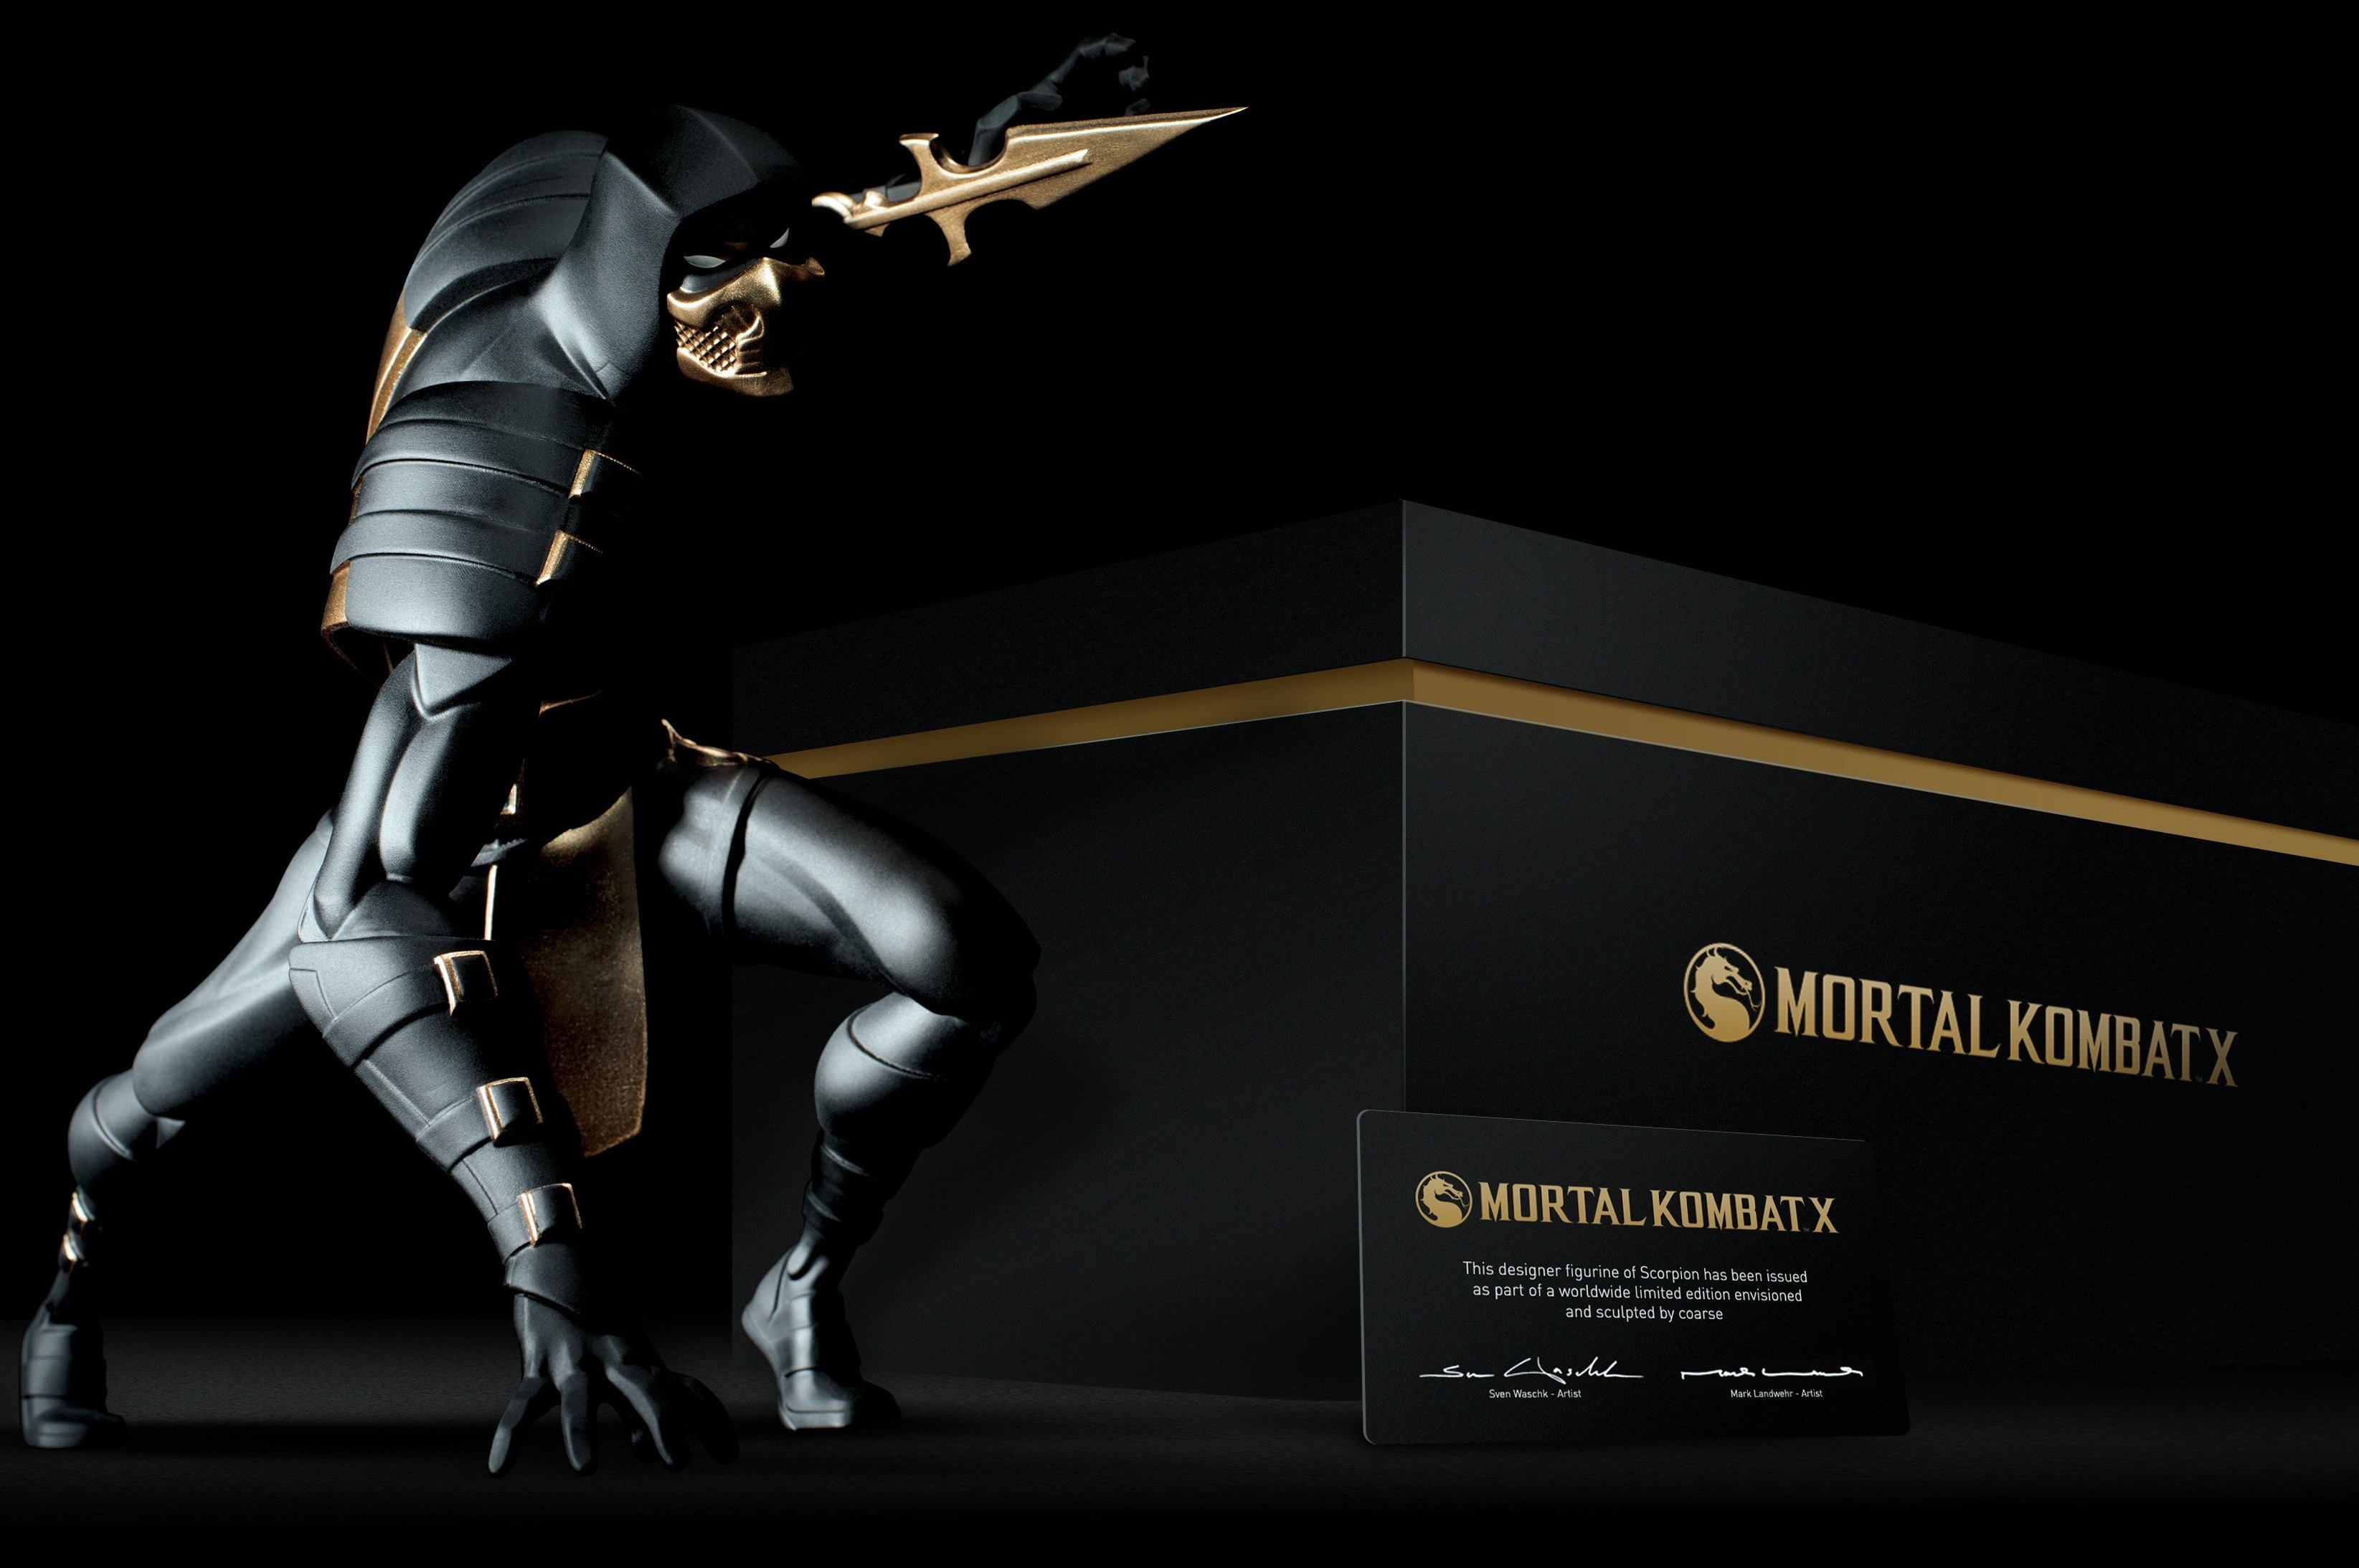 100-mortal-kombat-x-kollectors-edition-has-scorpion-figurine-by-coarse-1422974330447.jpg